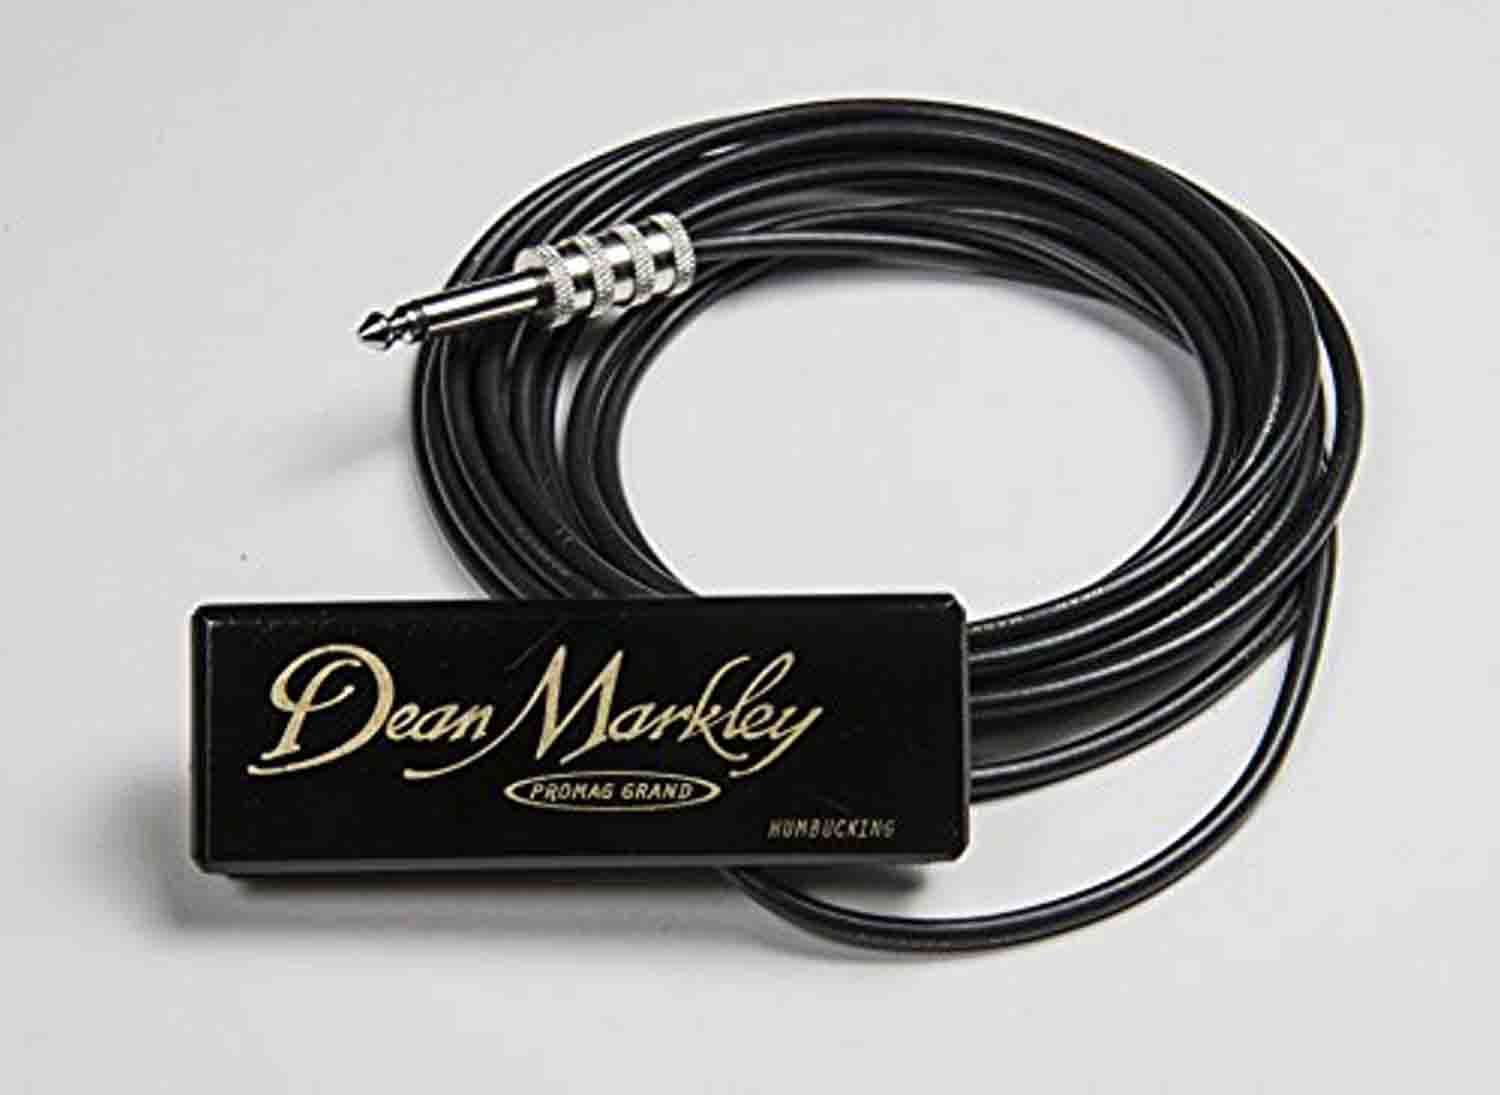 B-Stock: Dean Markley DM3016 ProMag Grand XM Acoustic Guitar Pickup by Dean Markley